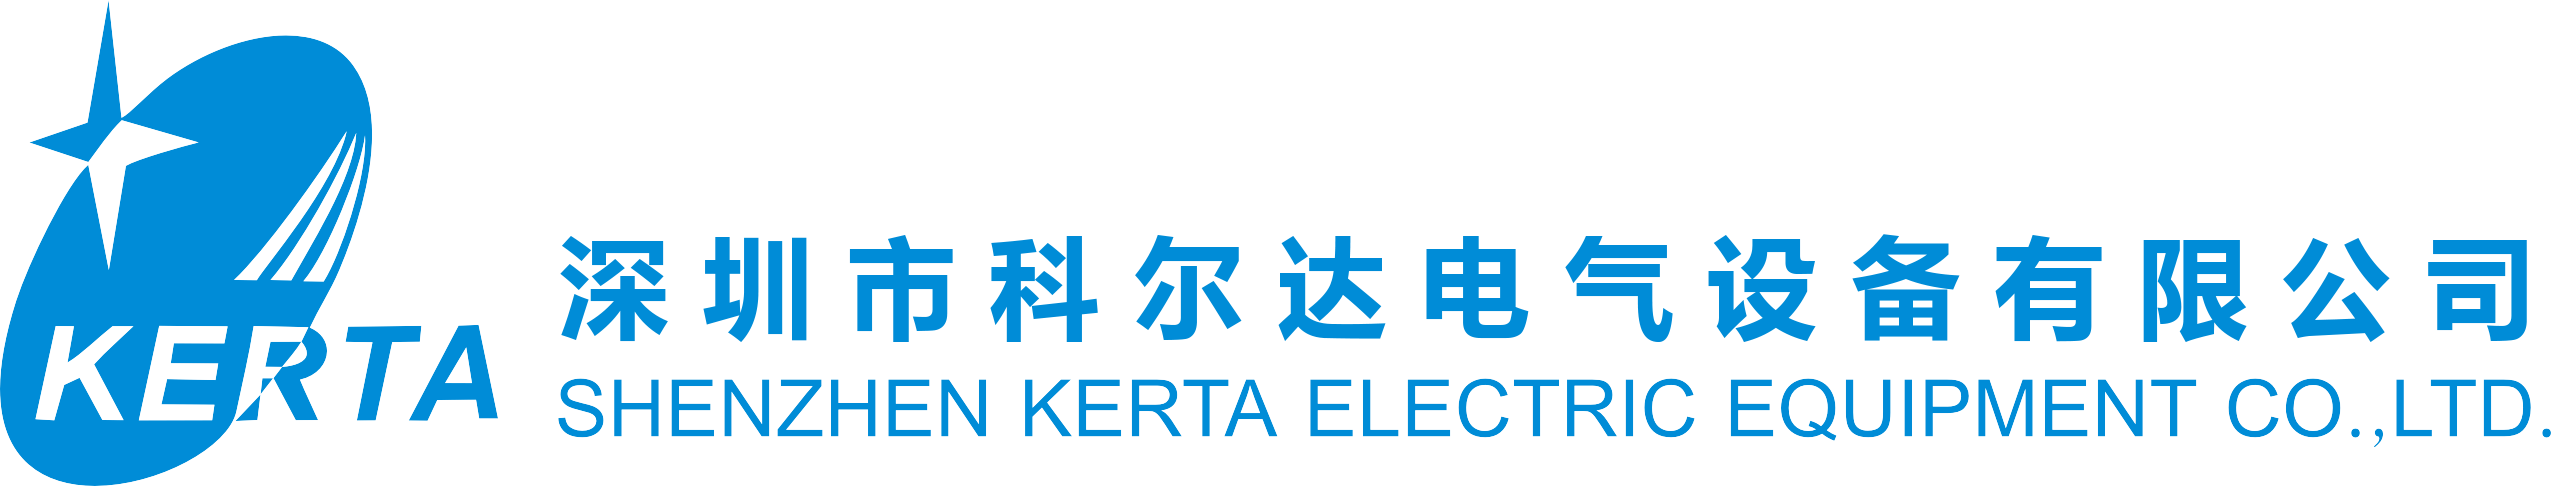 SHENZHEN KERTA ELECTRIC EQUIPMENT CO.,LTD